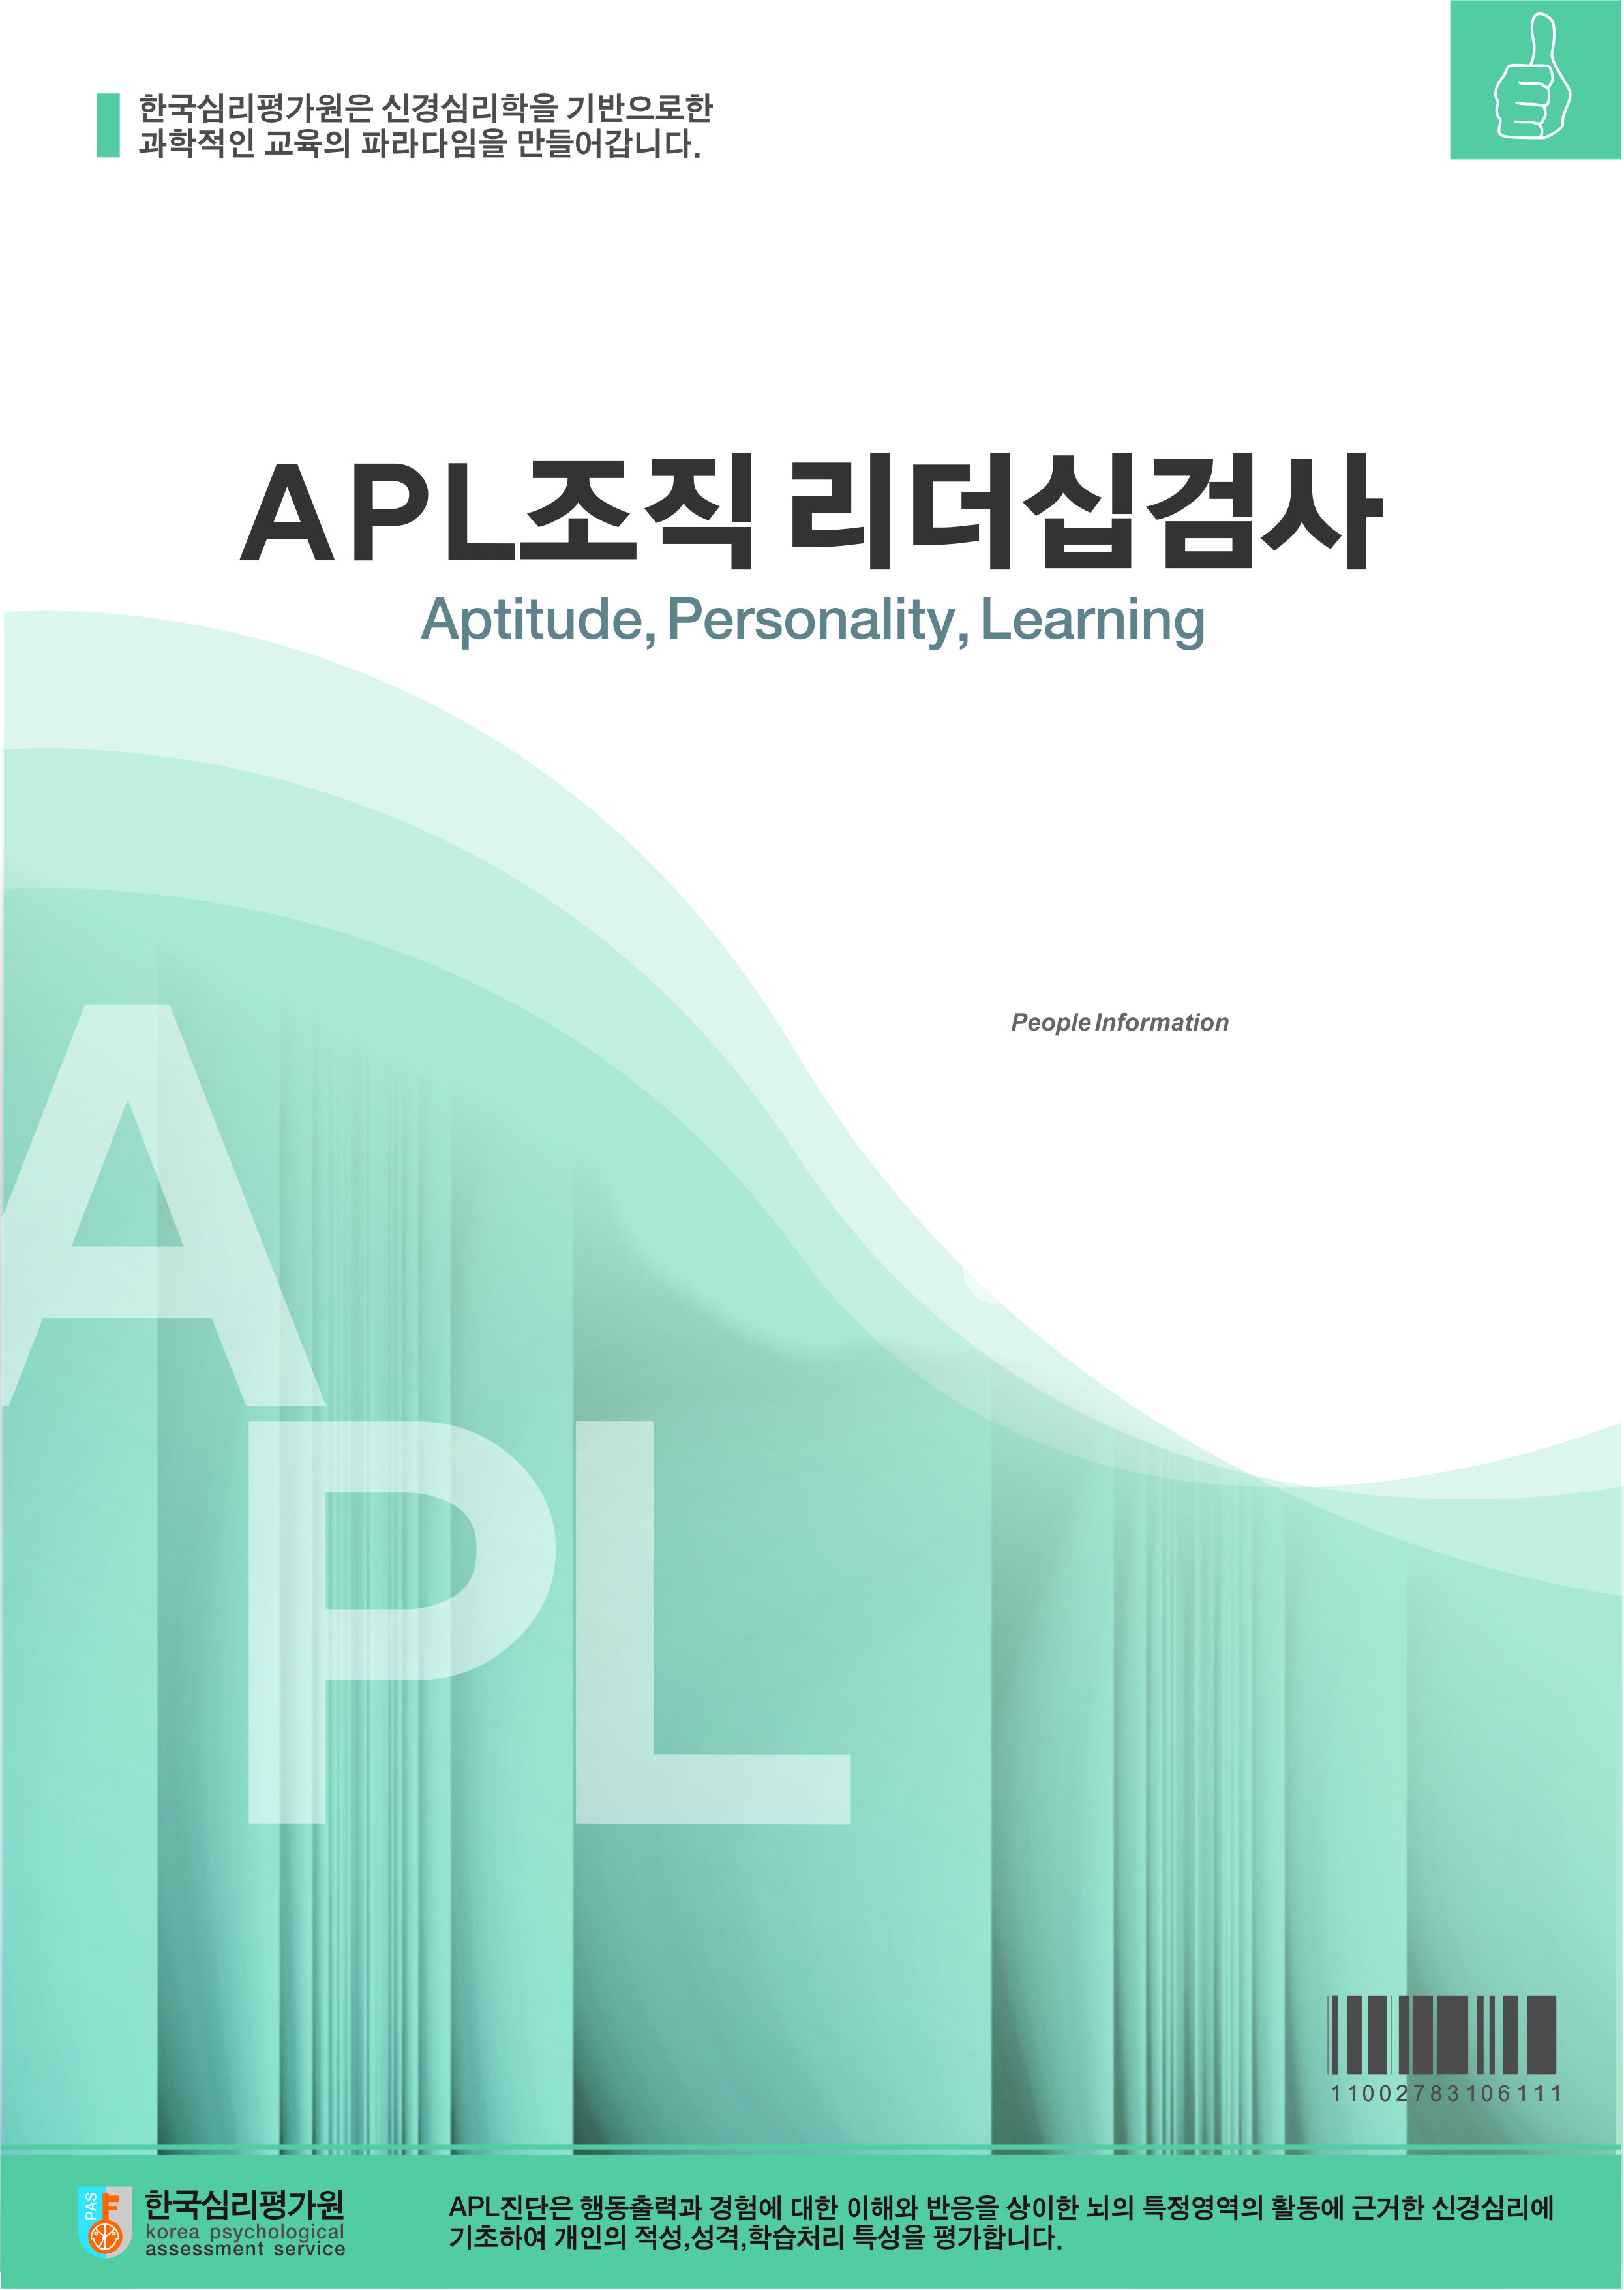 APL 조직리더십검사(조직/기업용)